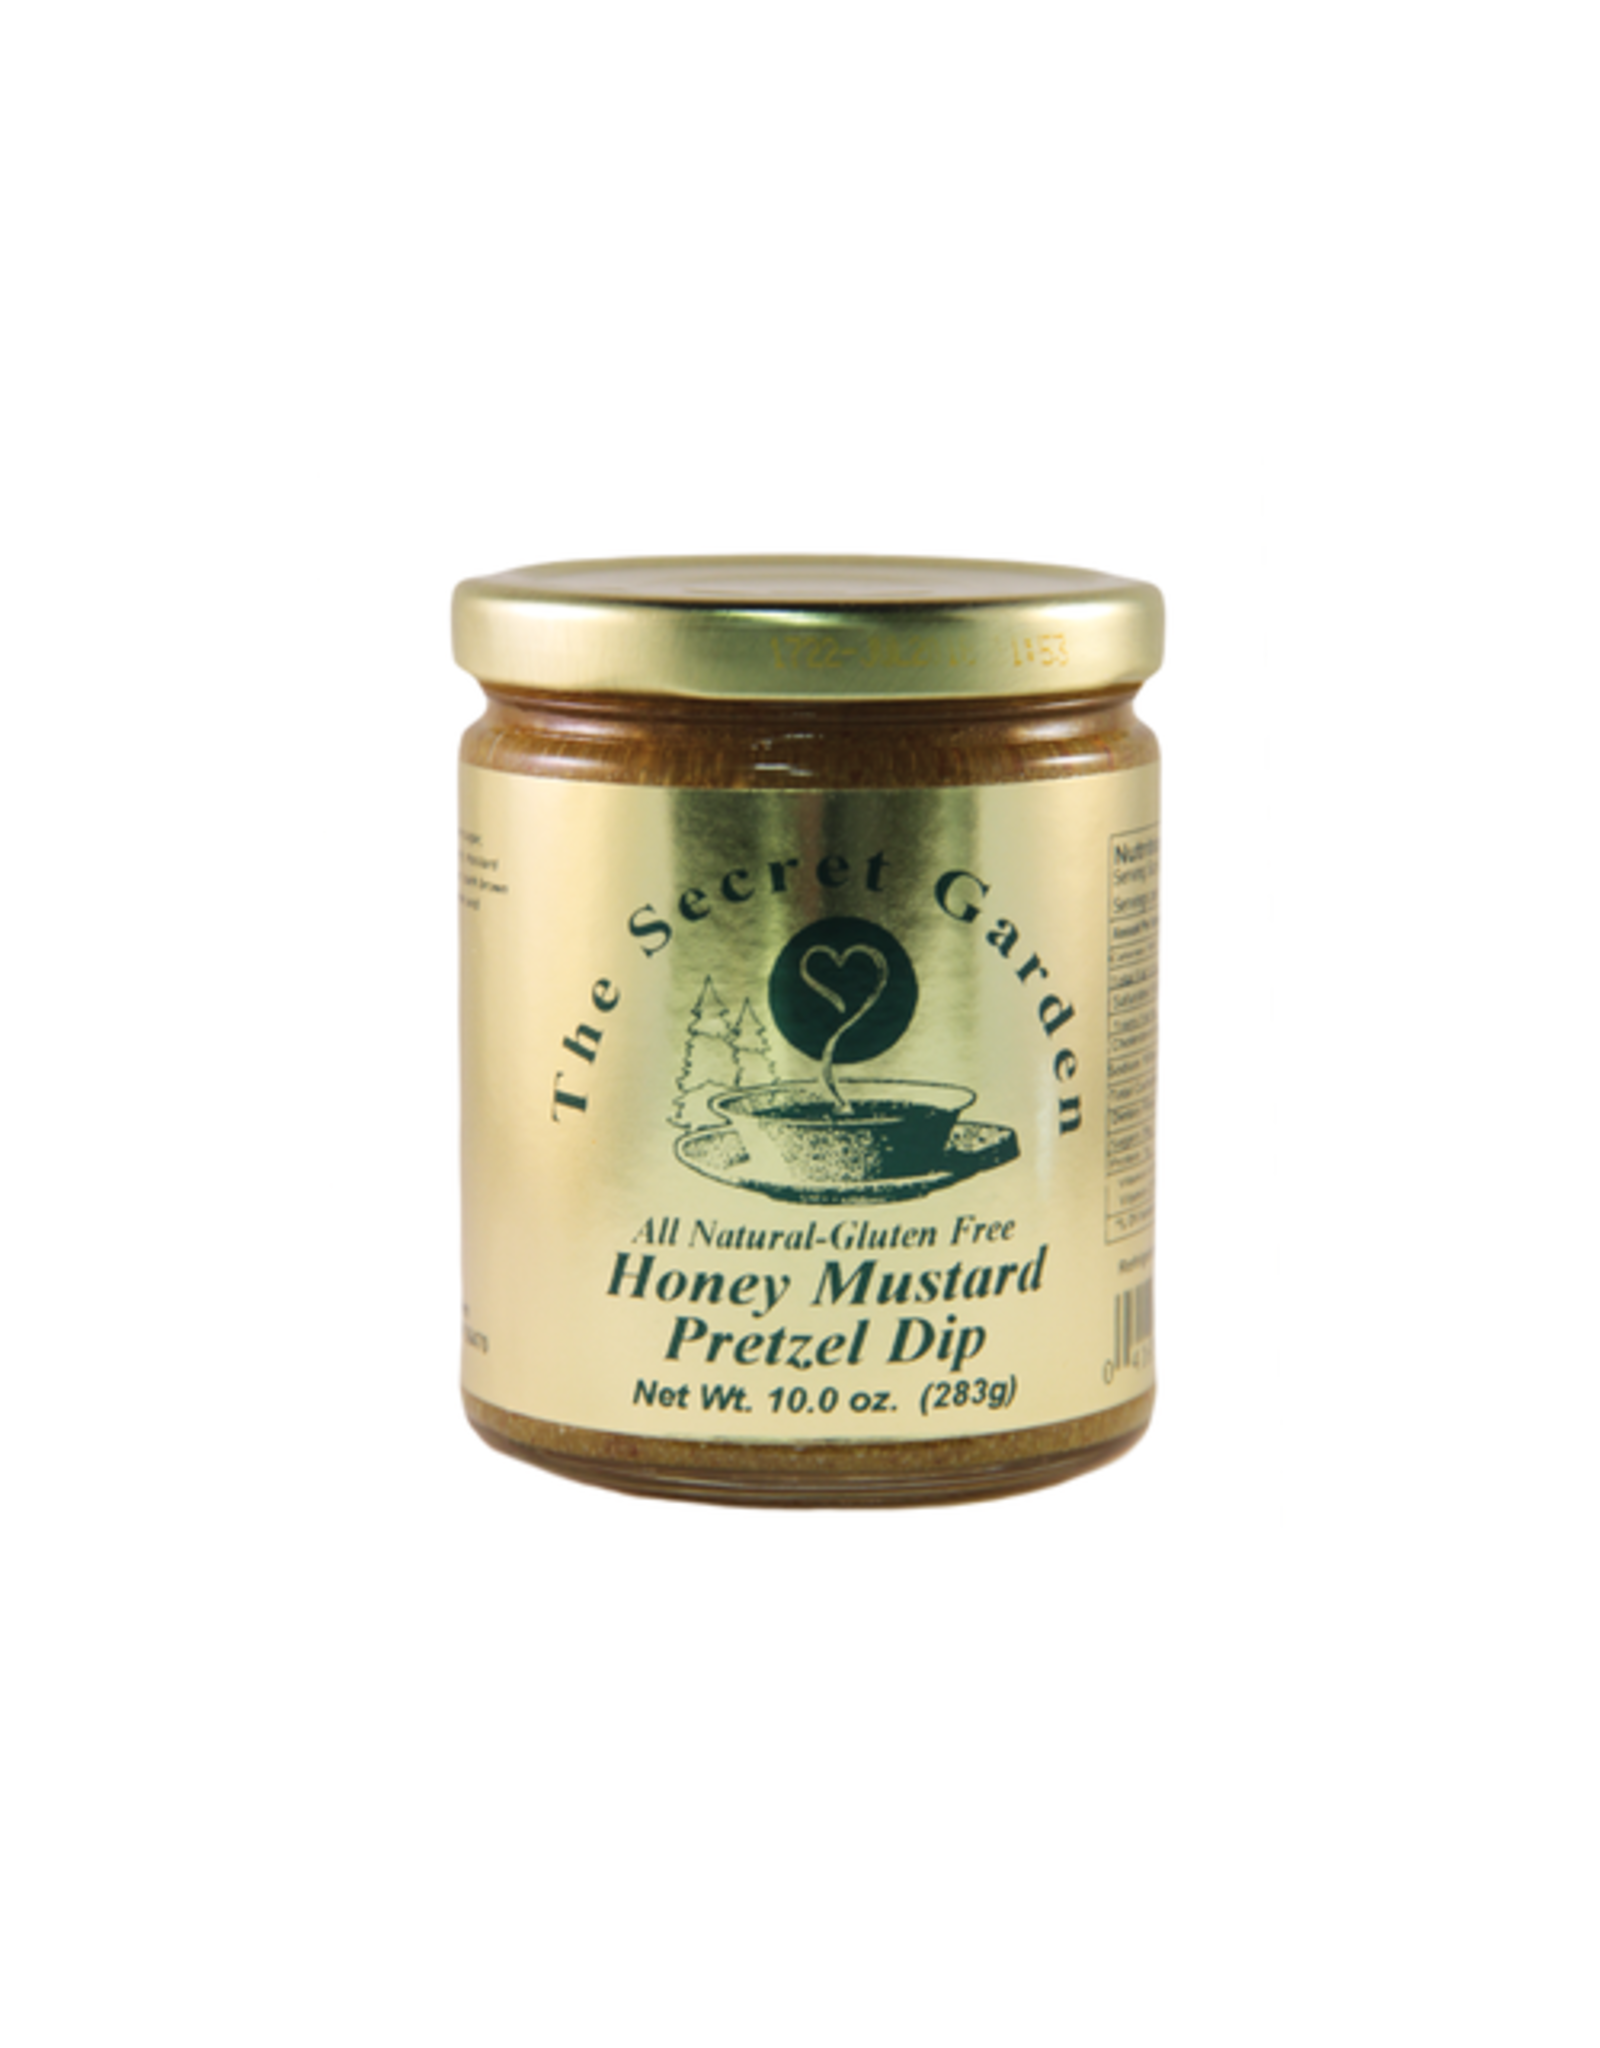 The Secret Garden Honey Mustard Pretzel Dip